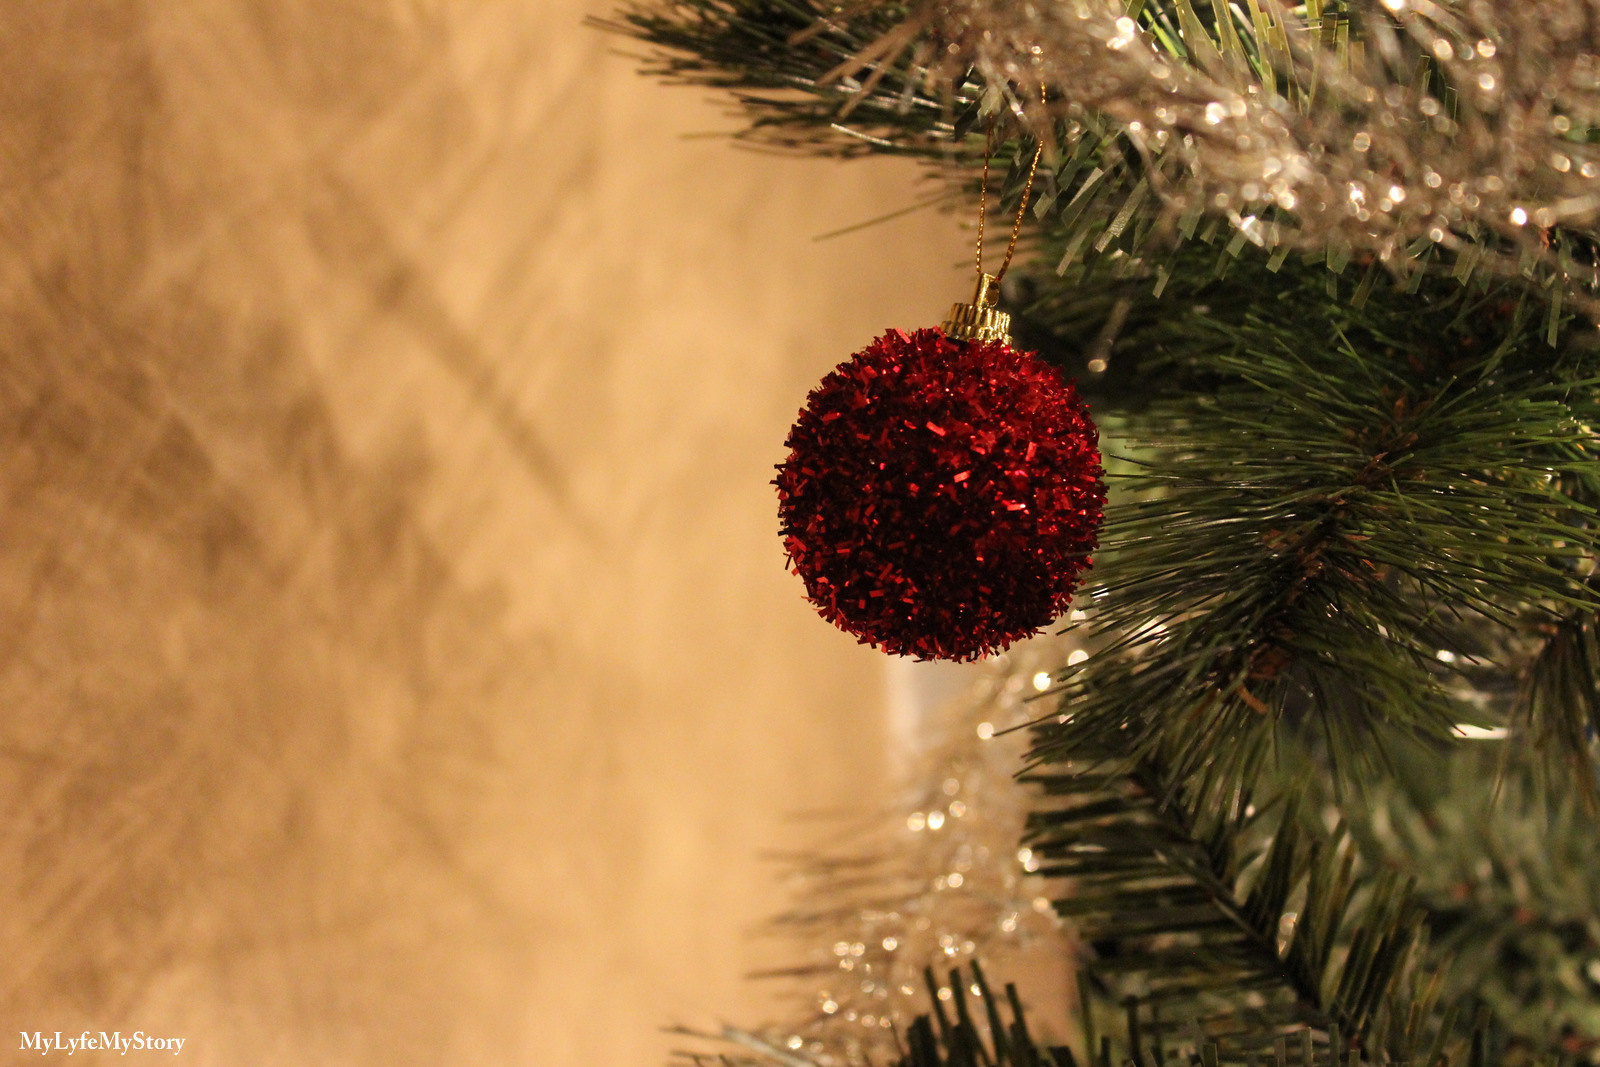 My Family Christmas Tree (1)